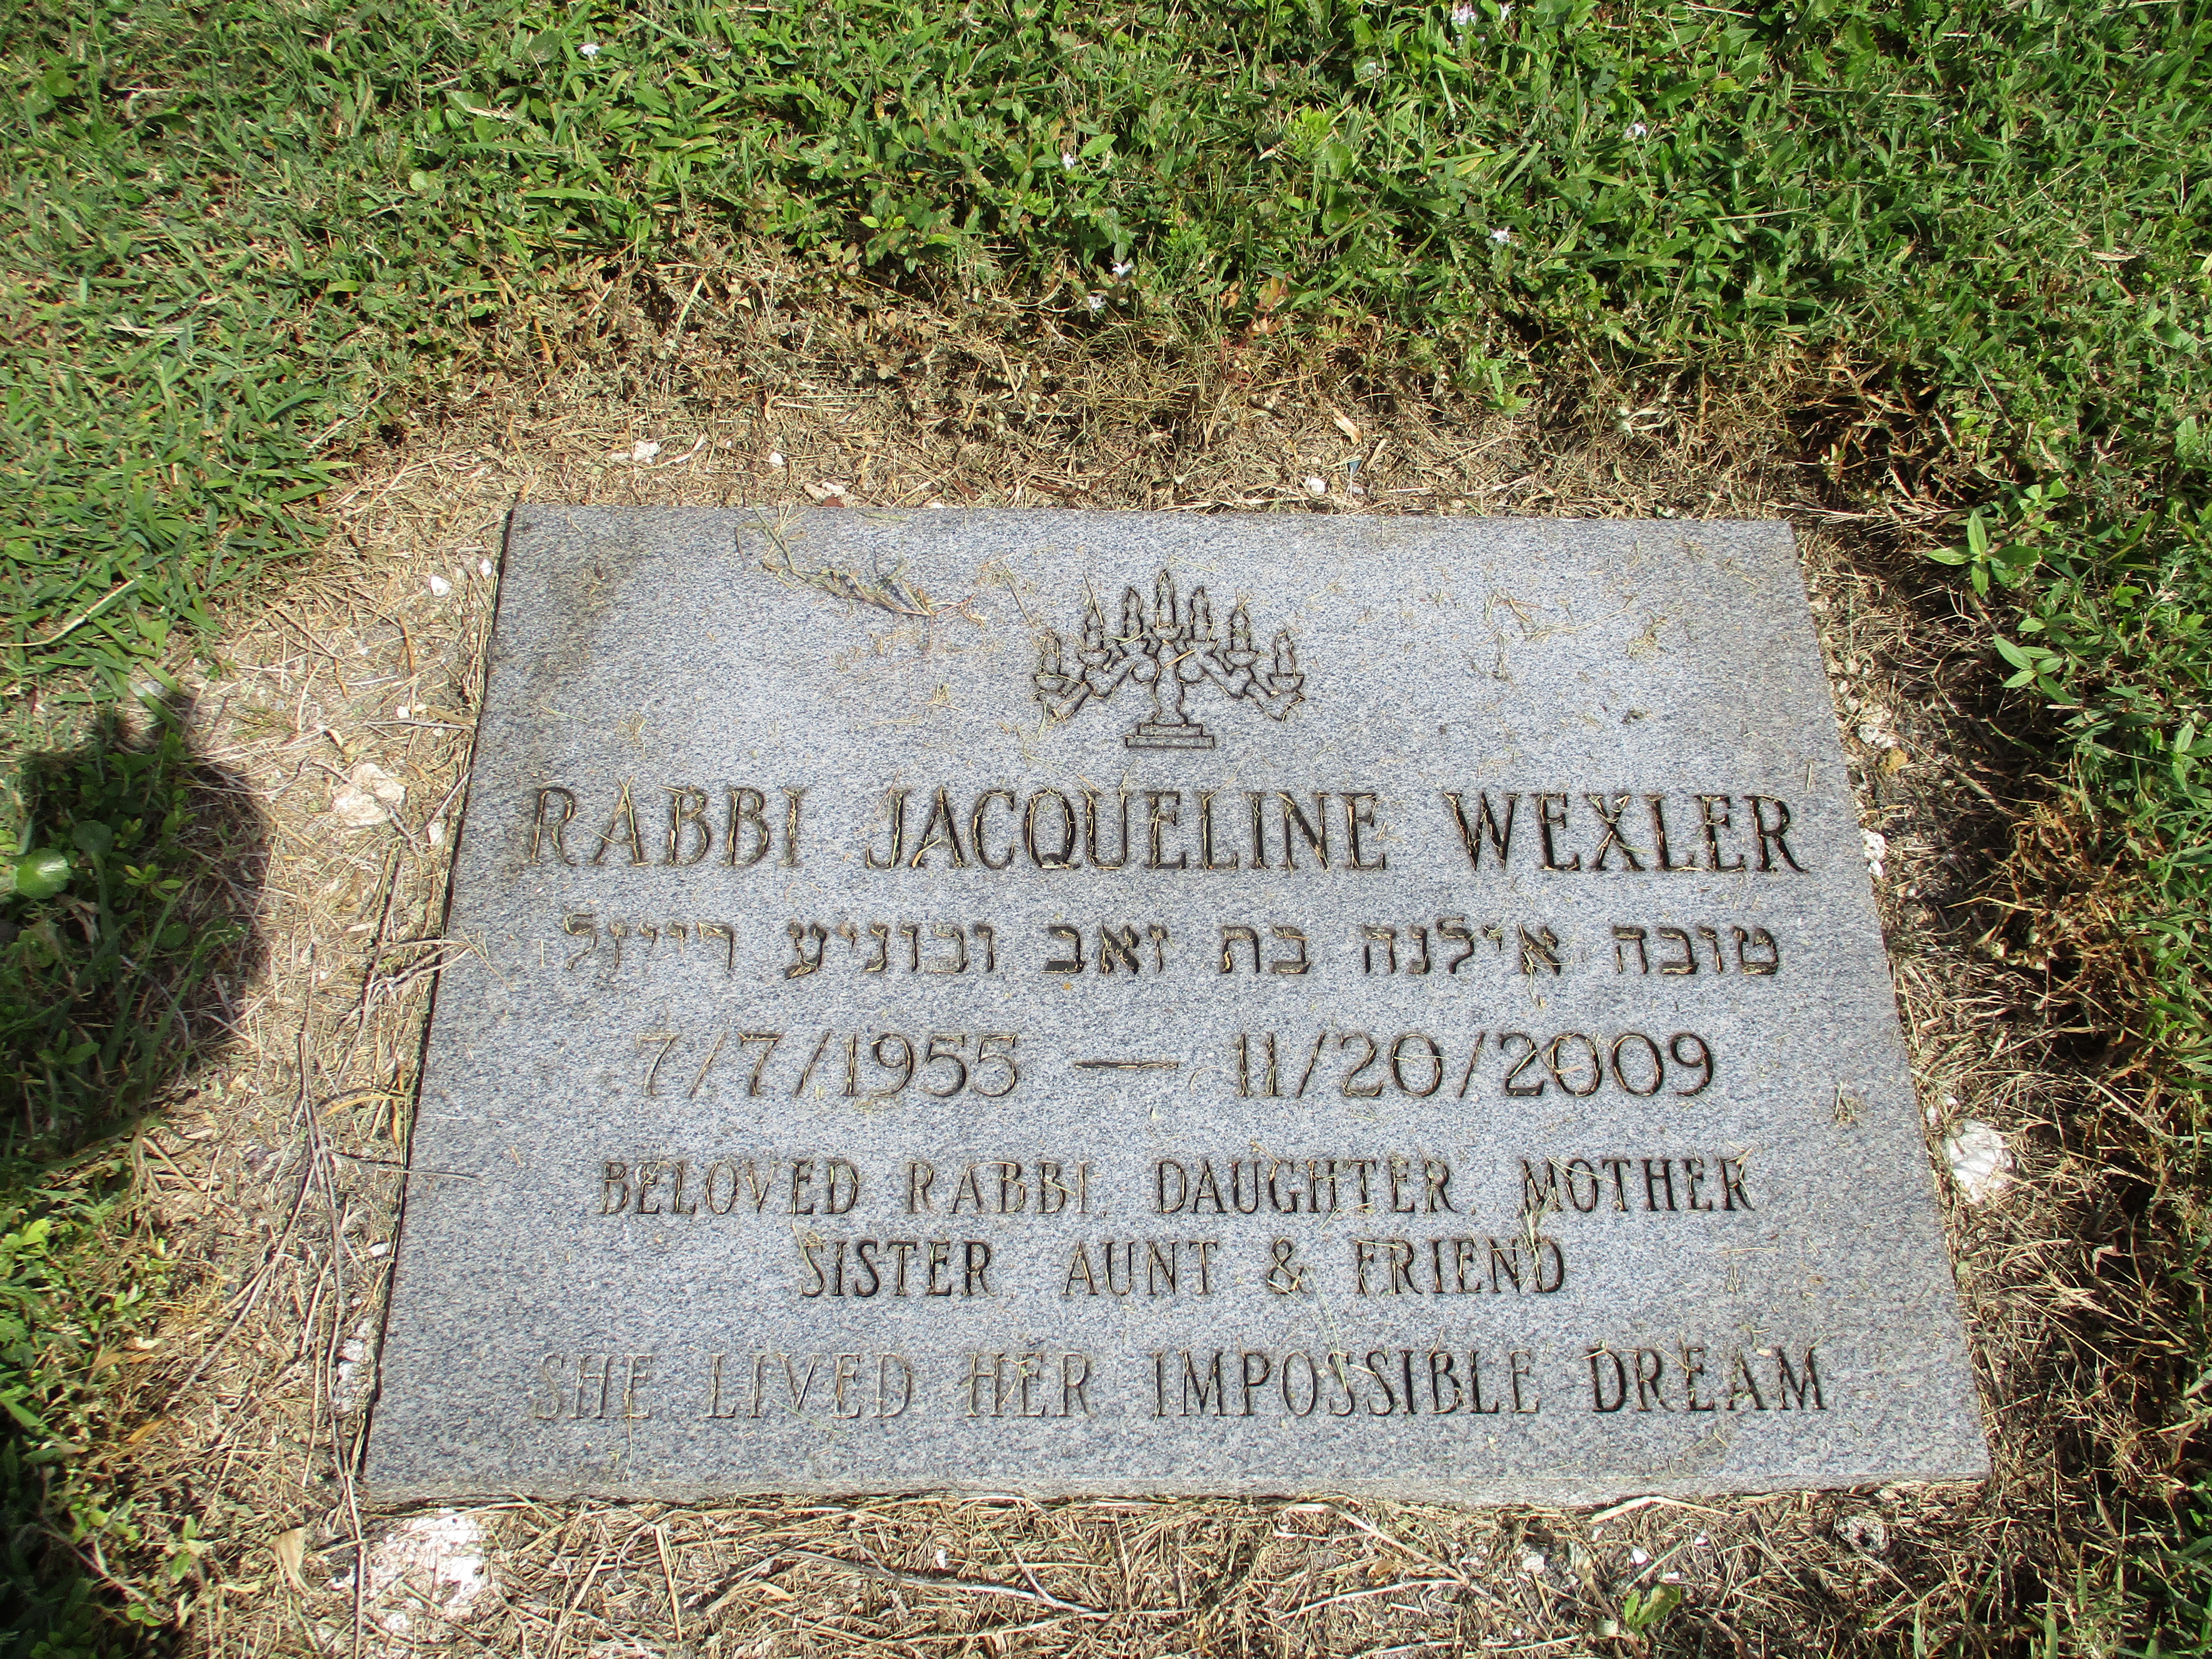 Rabbi Jacqueline Wexler